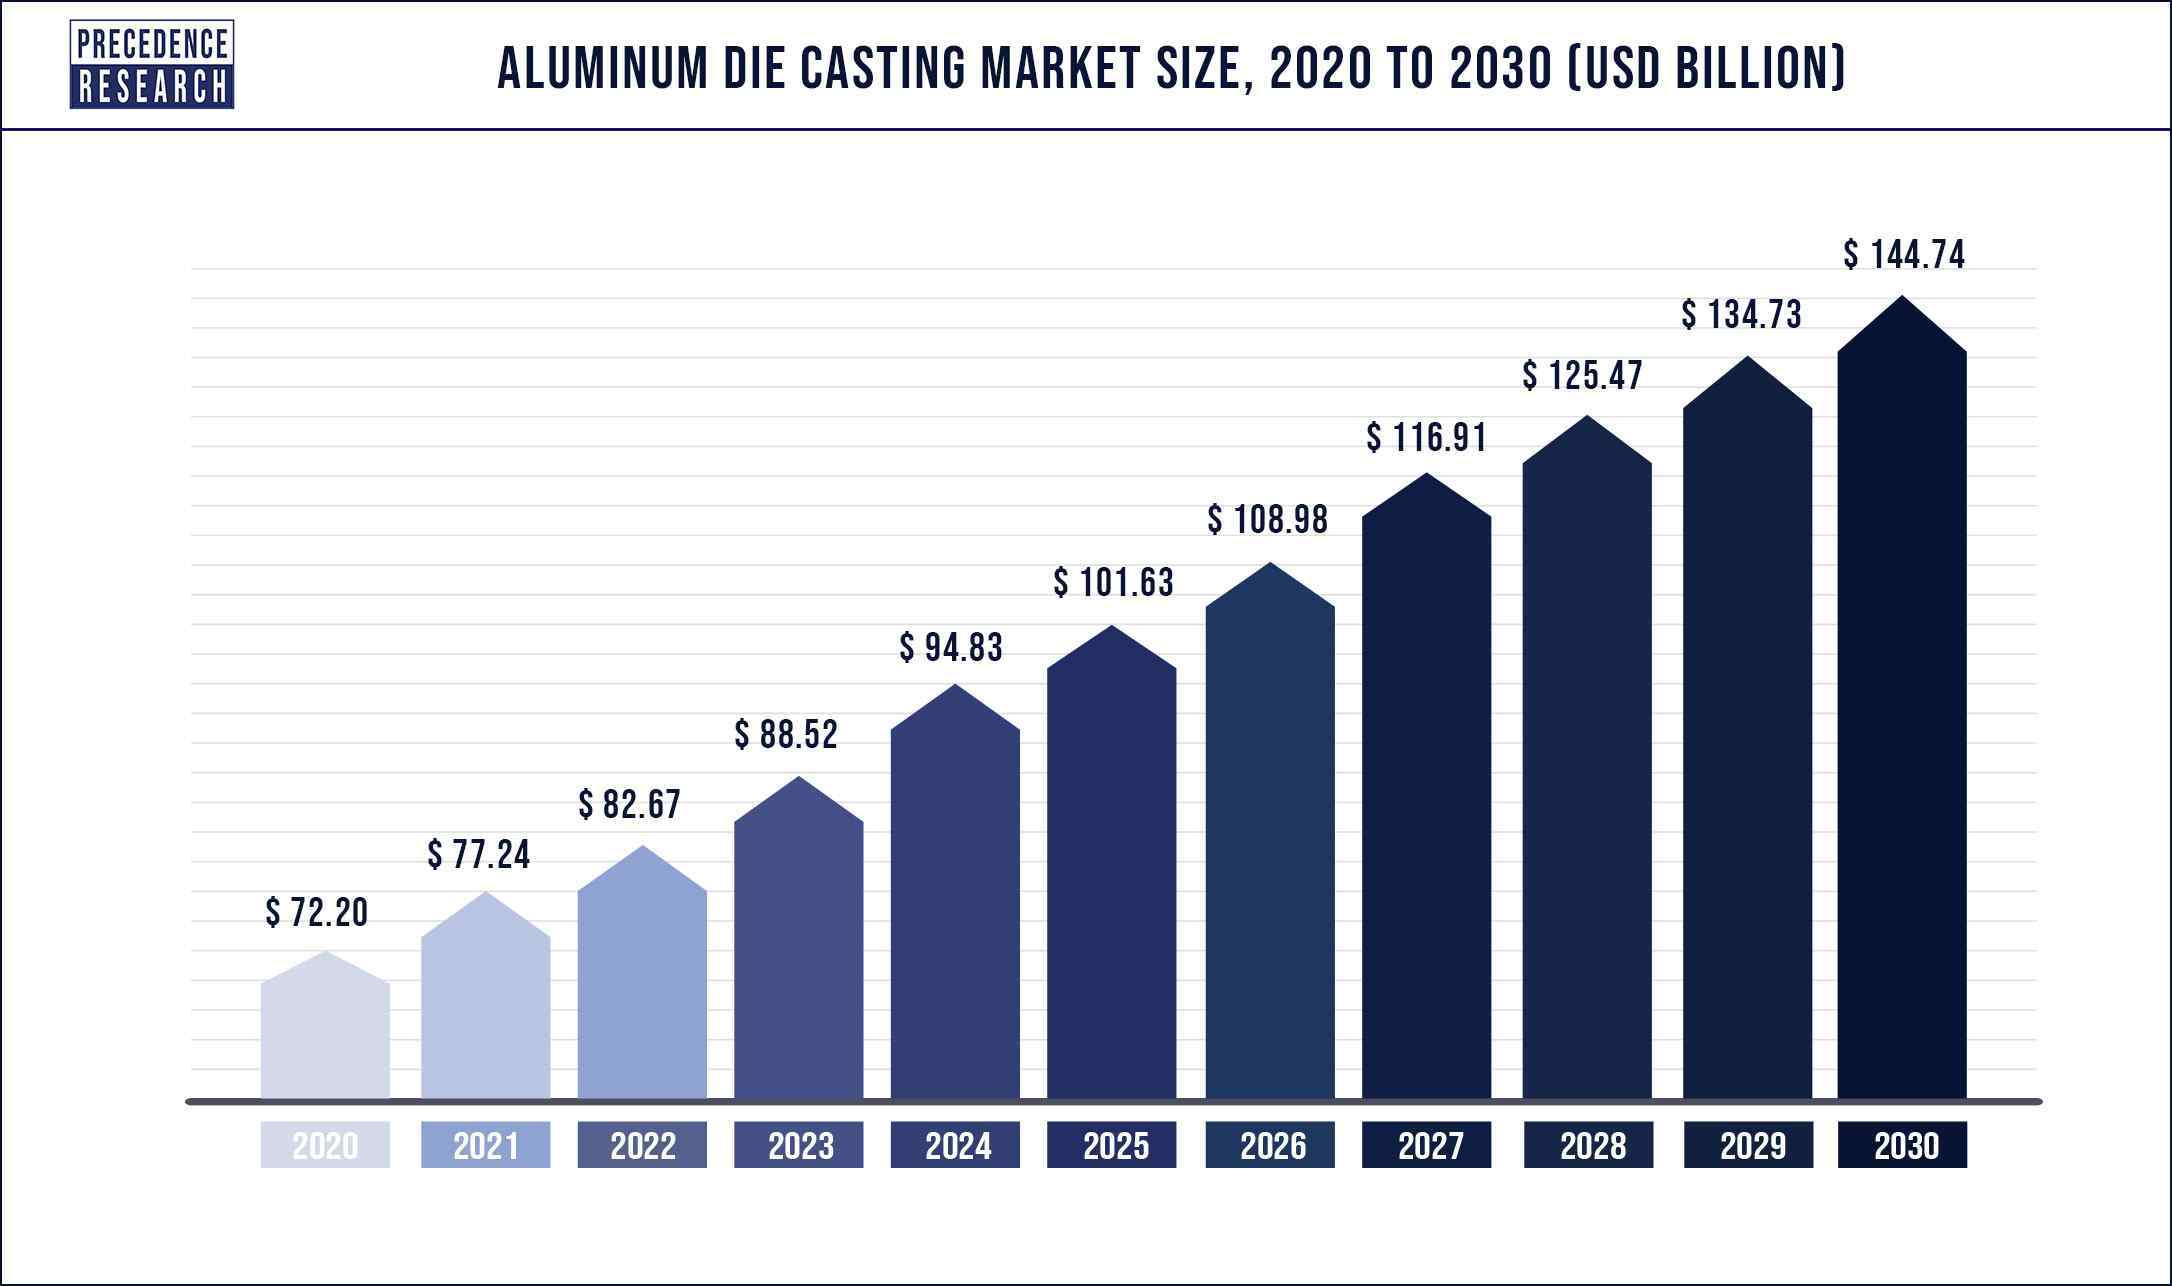 Aluminum Die Casting Market Size 2020 to 2030